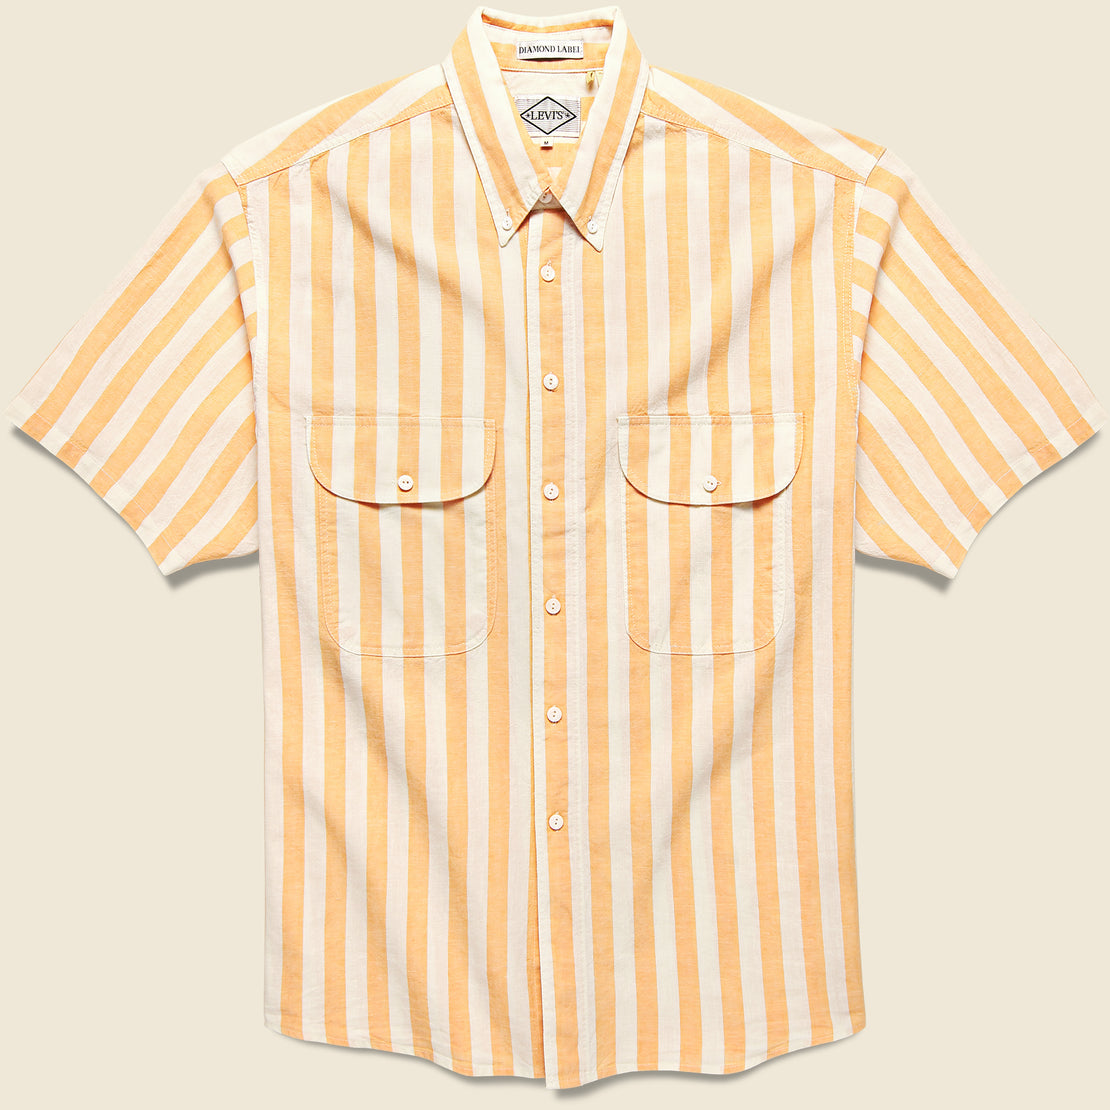 Levis Vintage Clothing Diamond Shirt - Melon/Orange/White